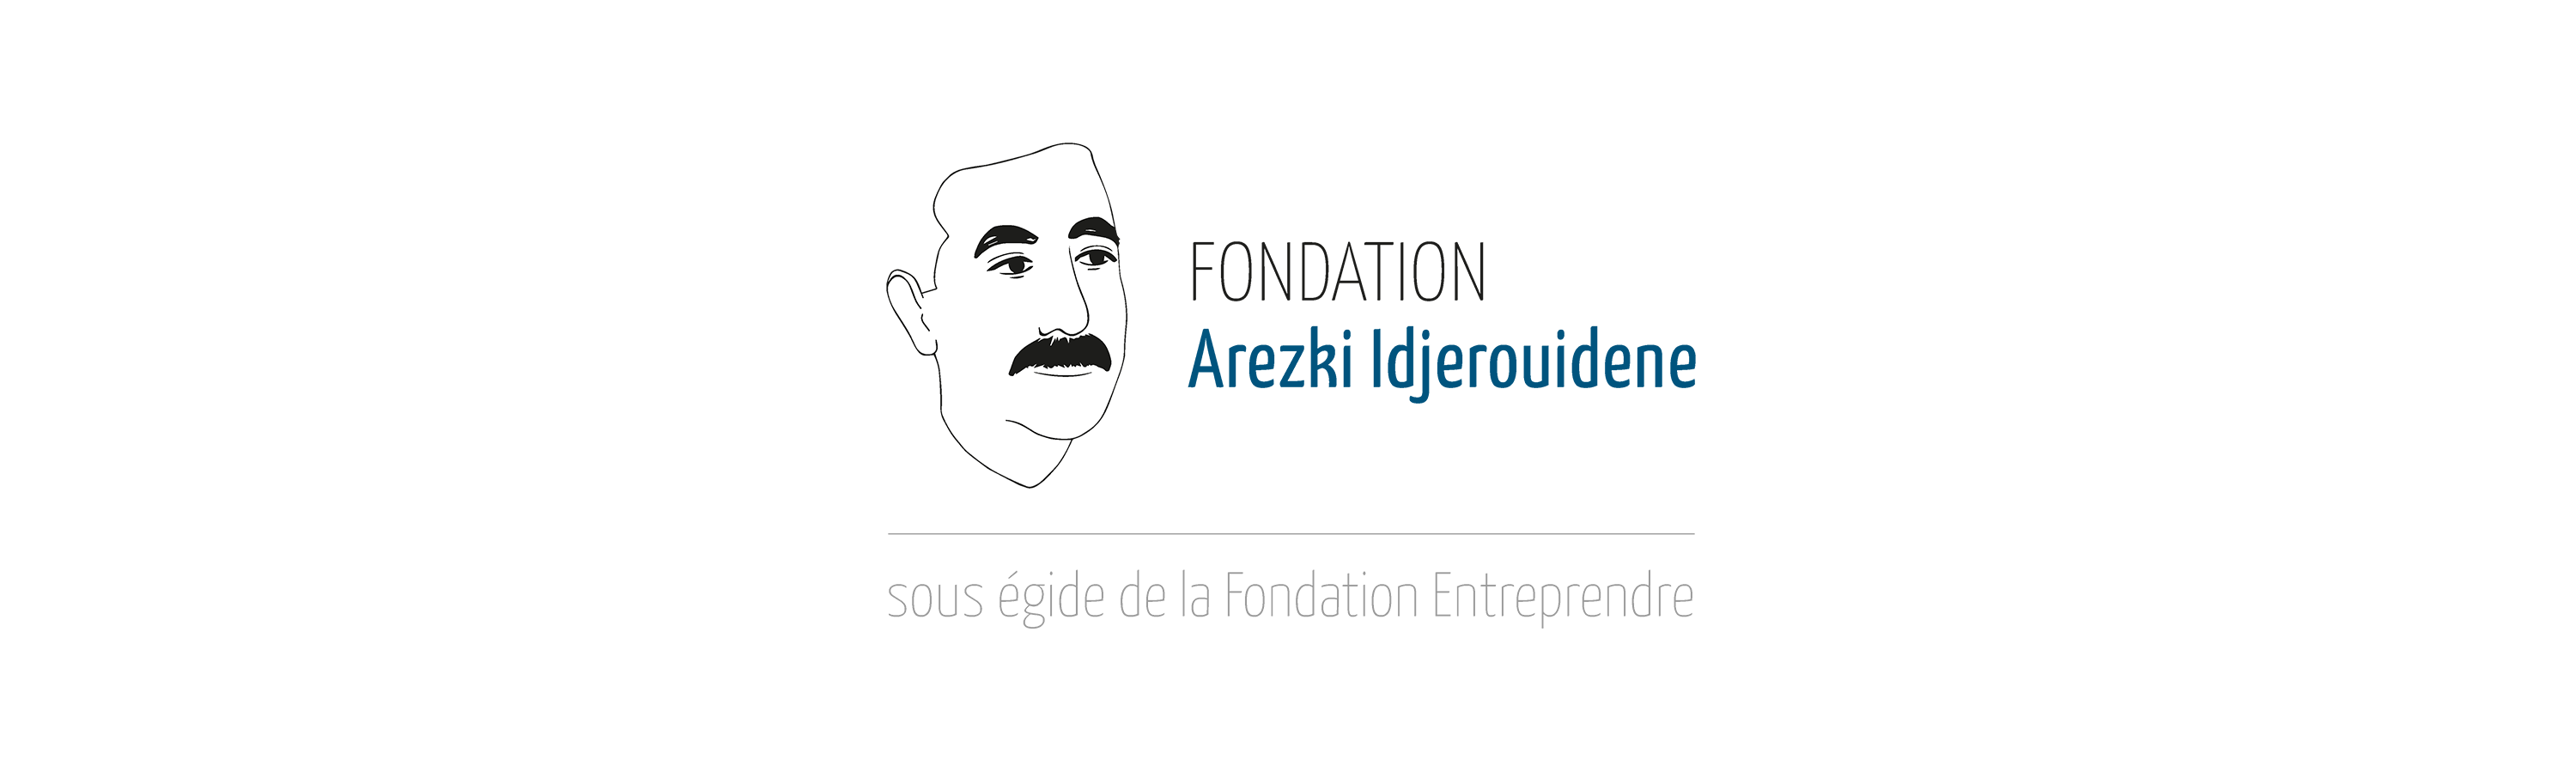 Bannière fondation Arezki Idjerouidene-V2.png